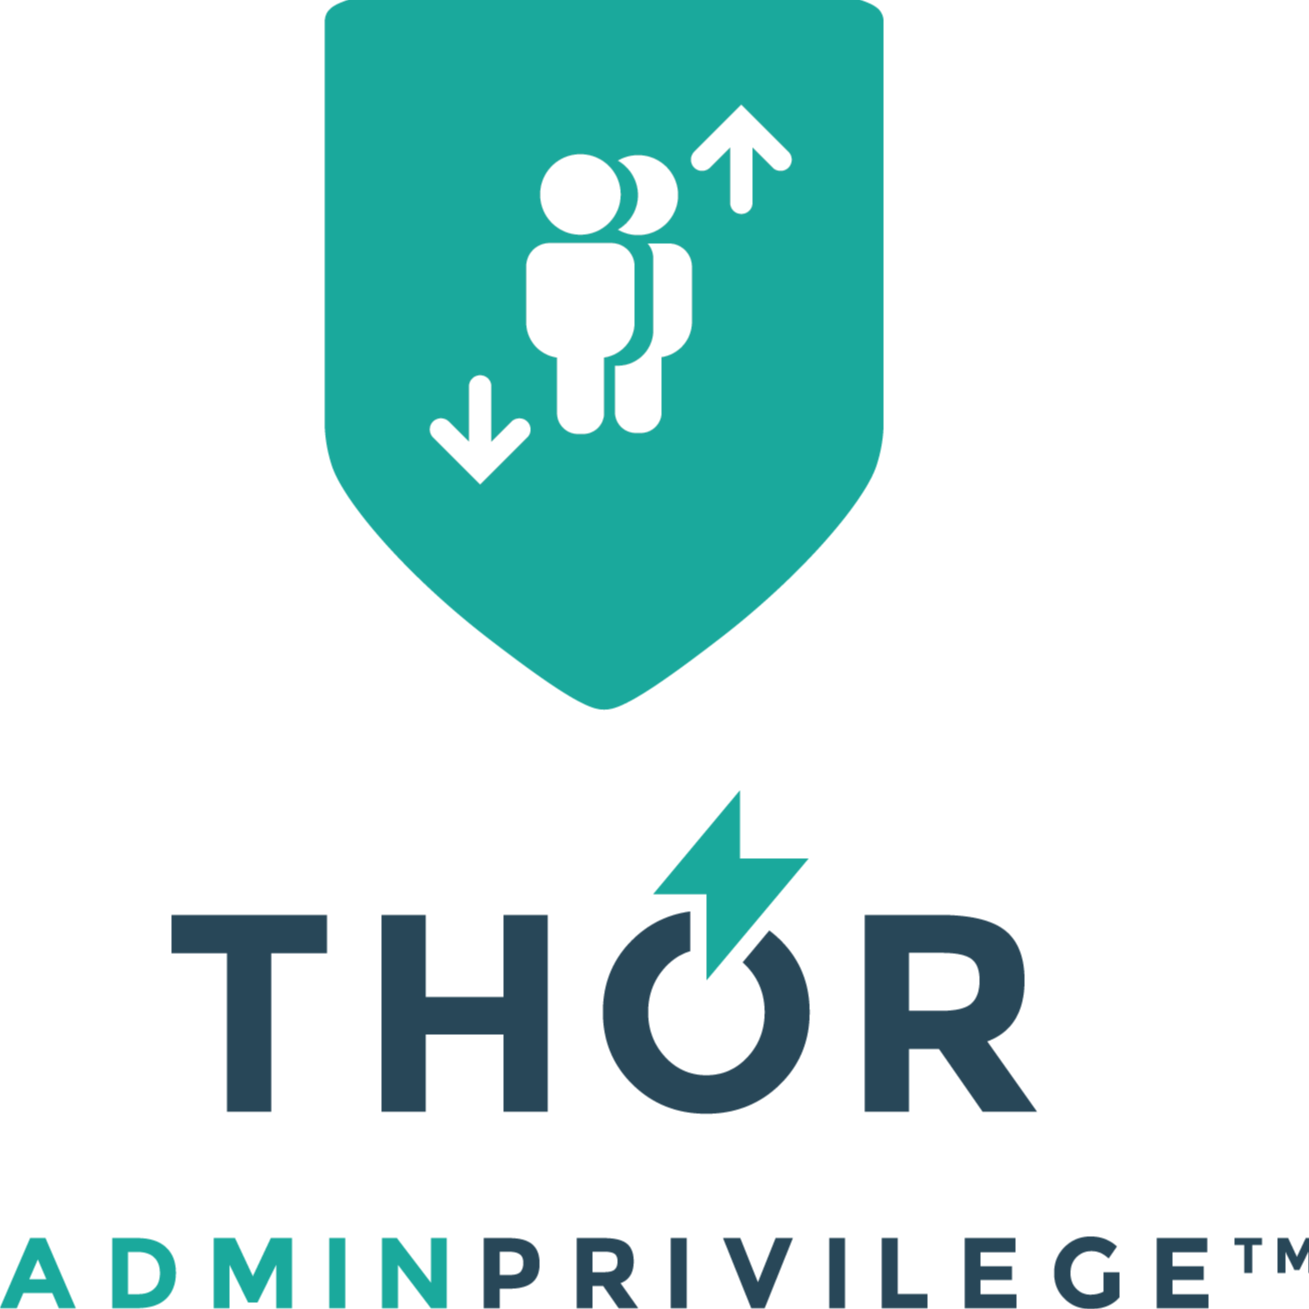 Thor AdminPrivilege